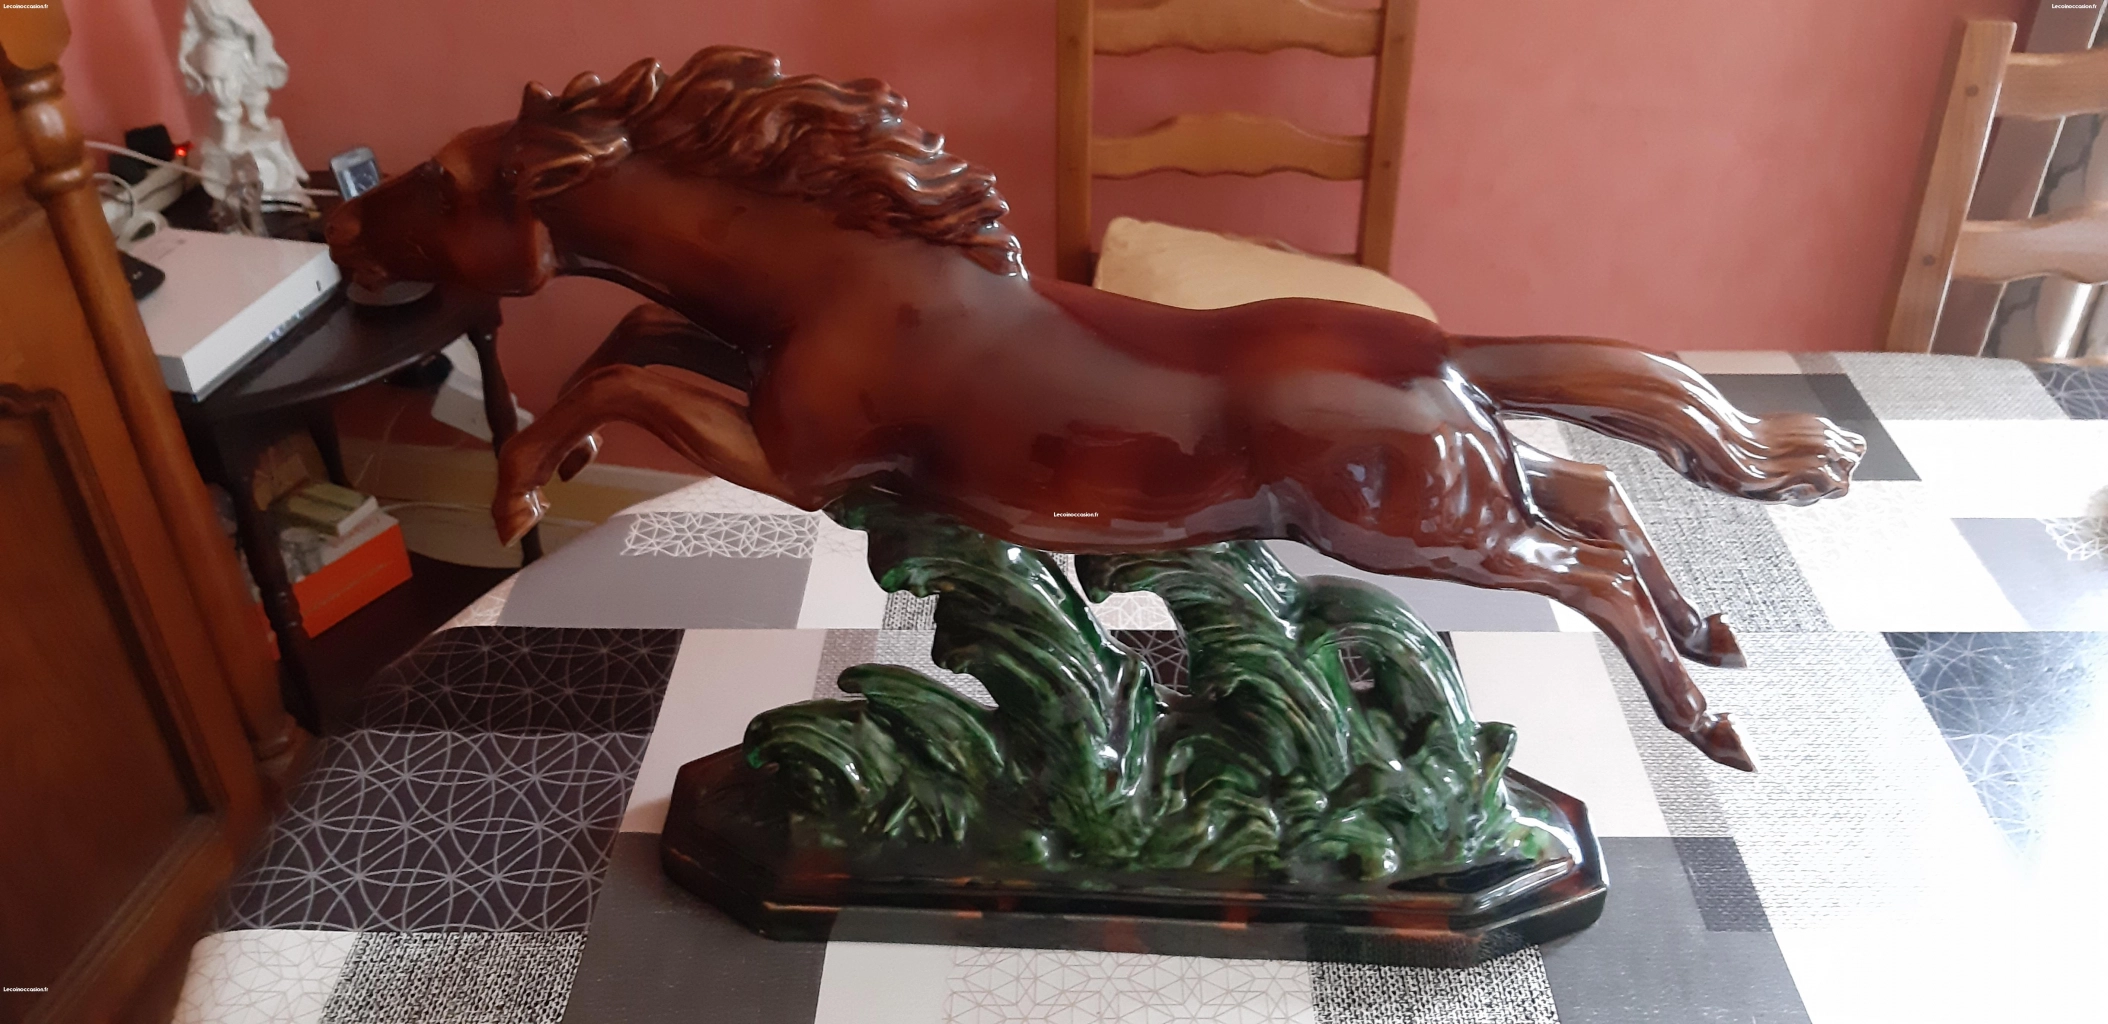 figurine cheval